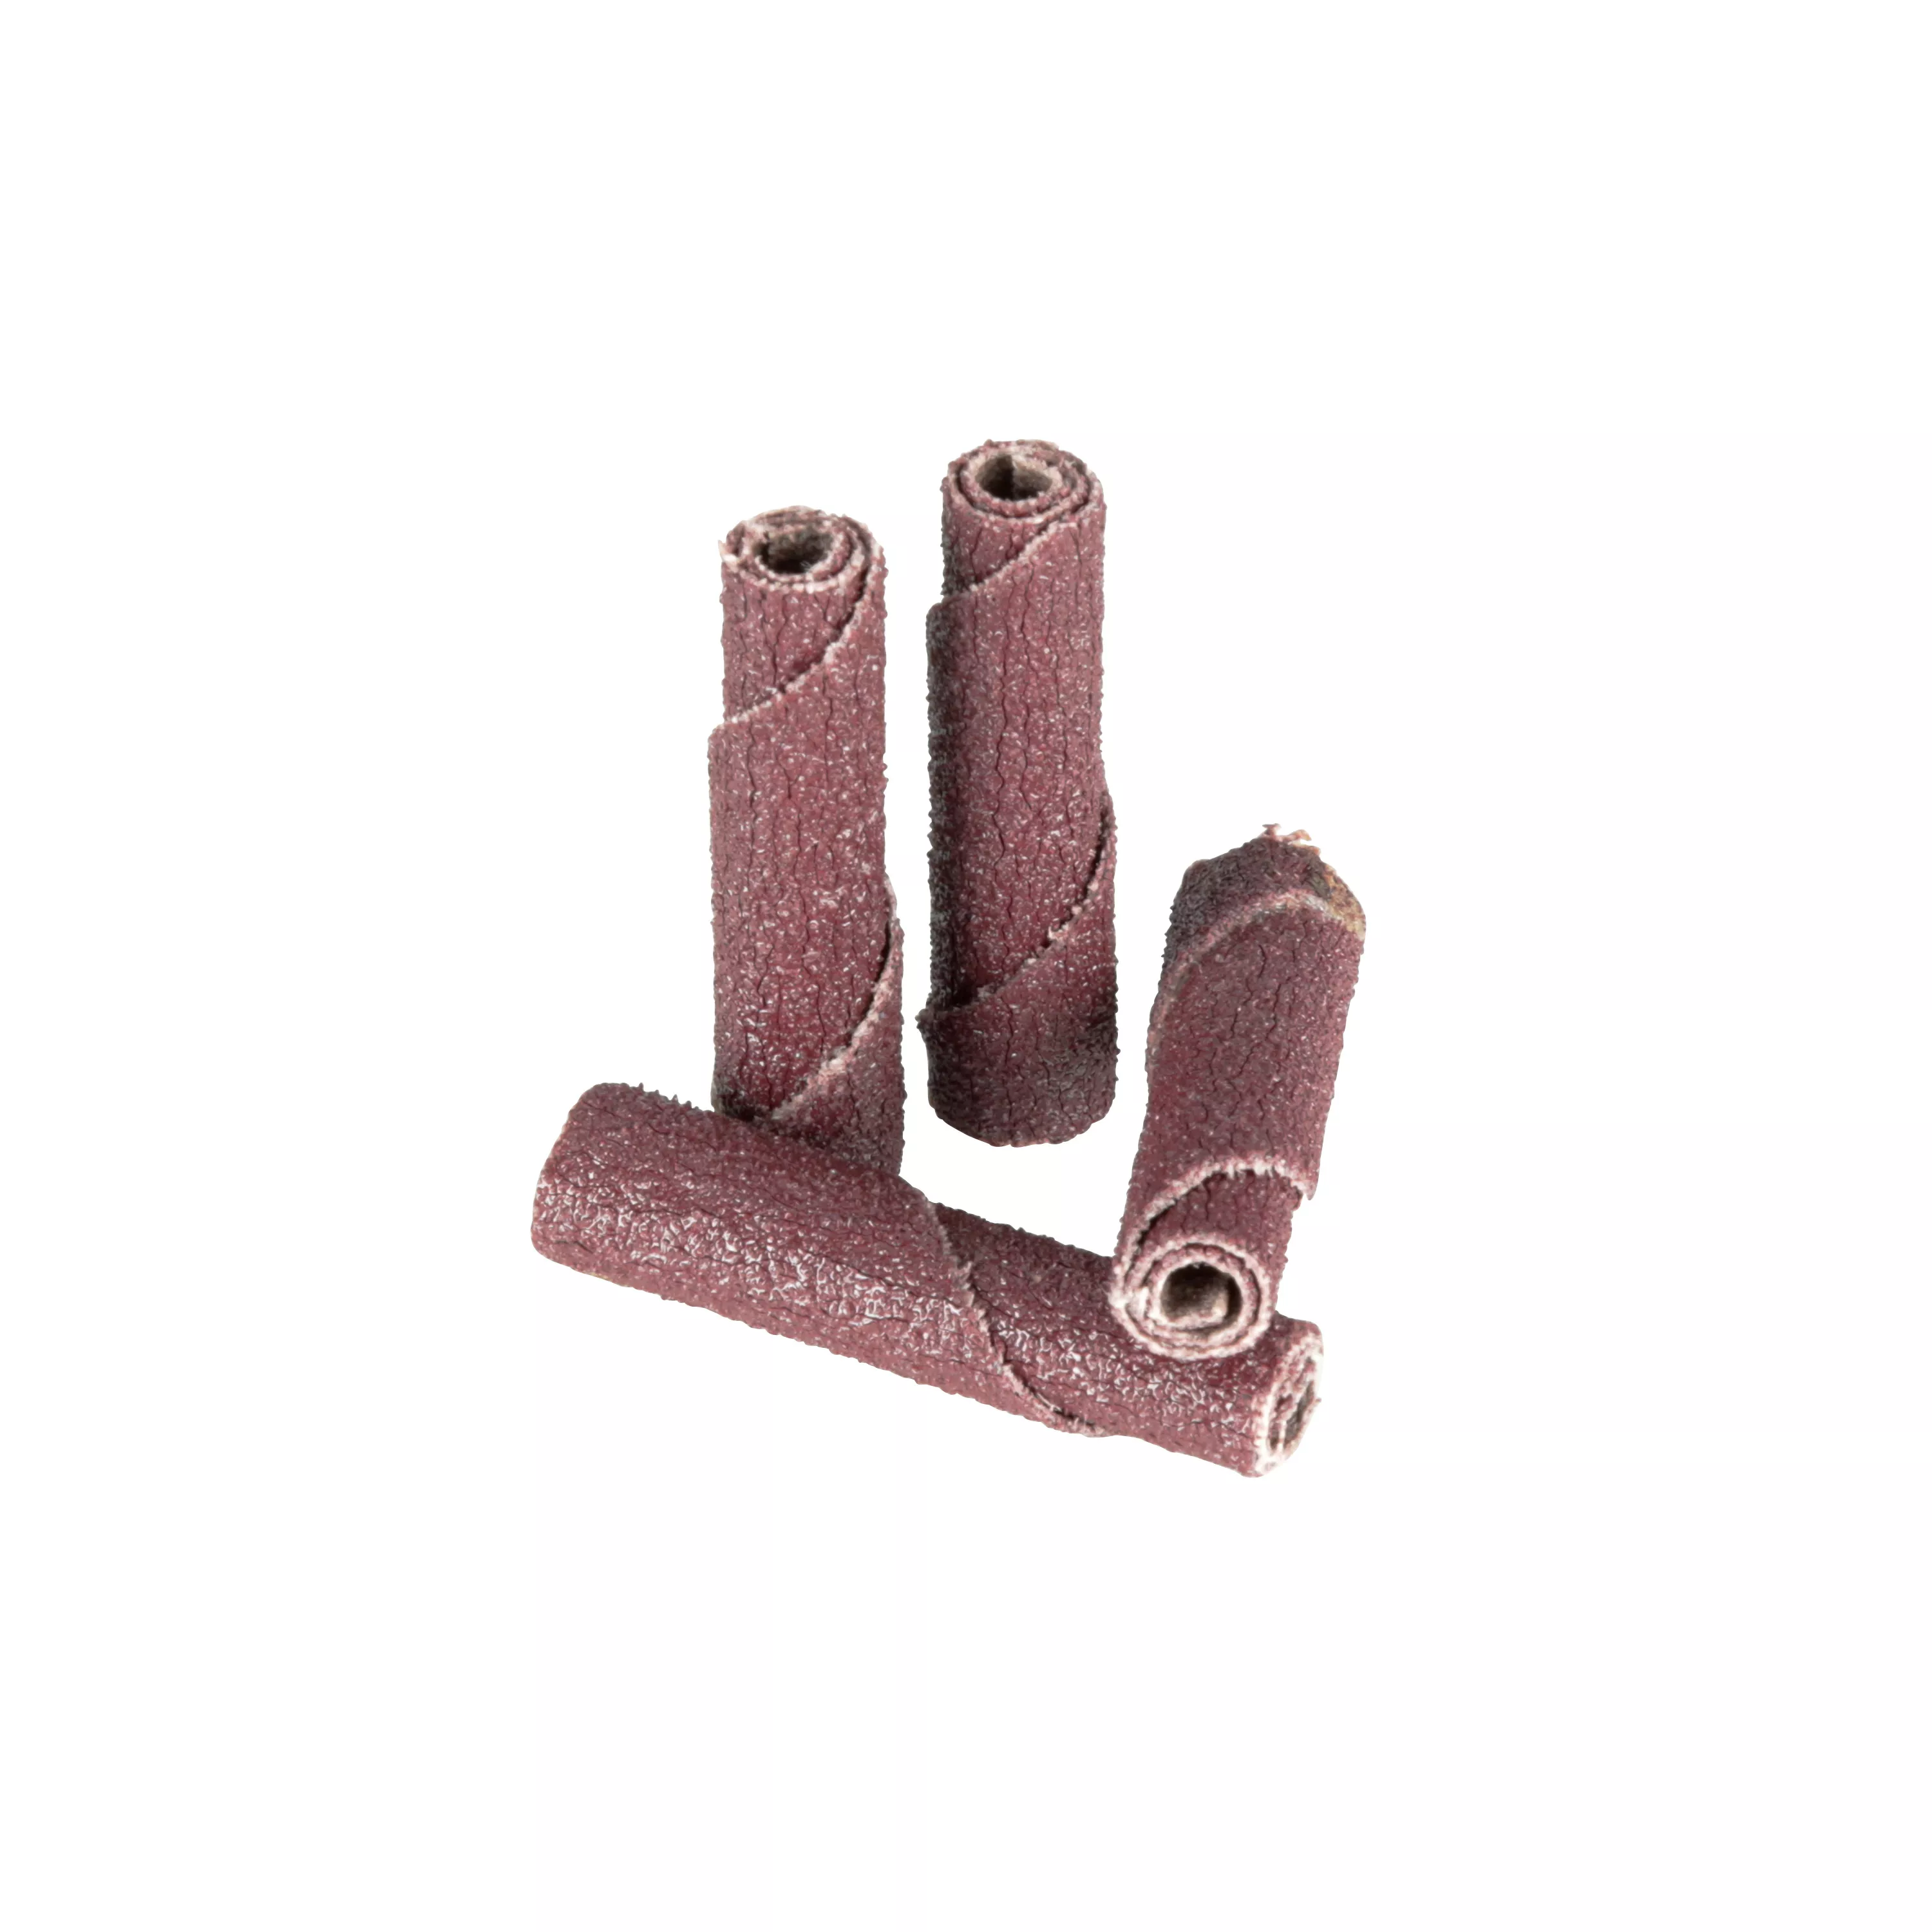 SKU 7100102810 | Standard Abrasives™ Aluminum Oxide Cartridge Roll